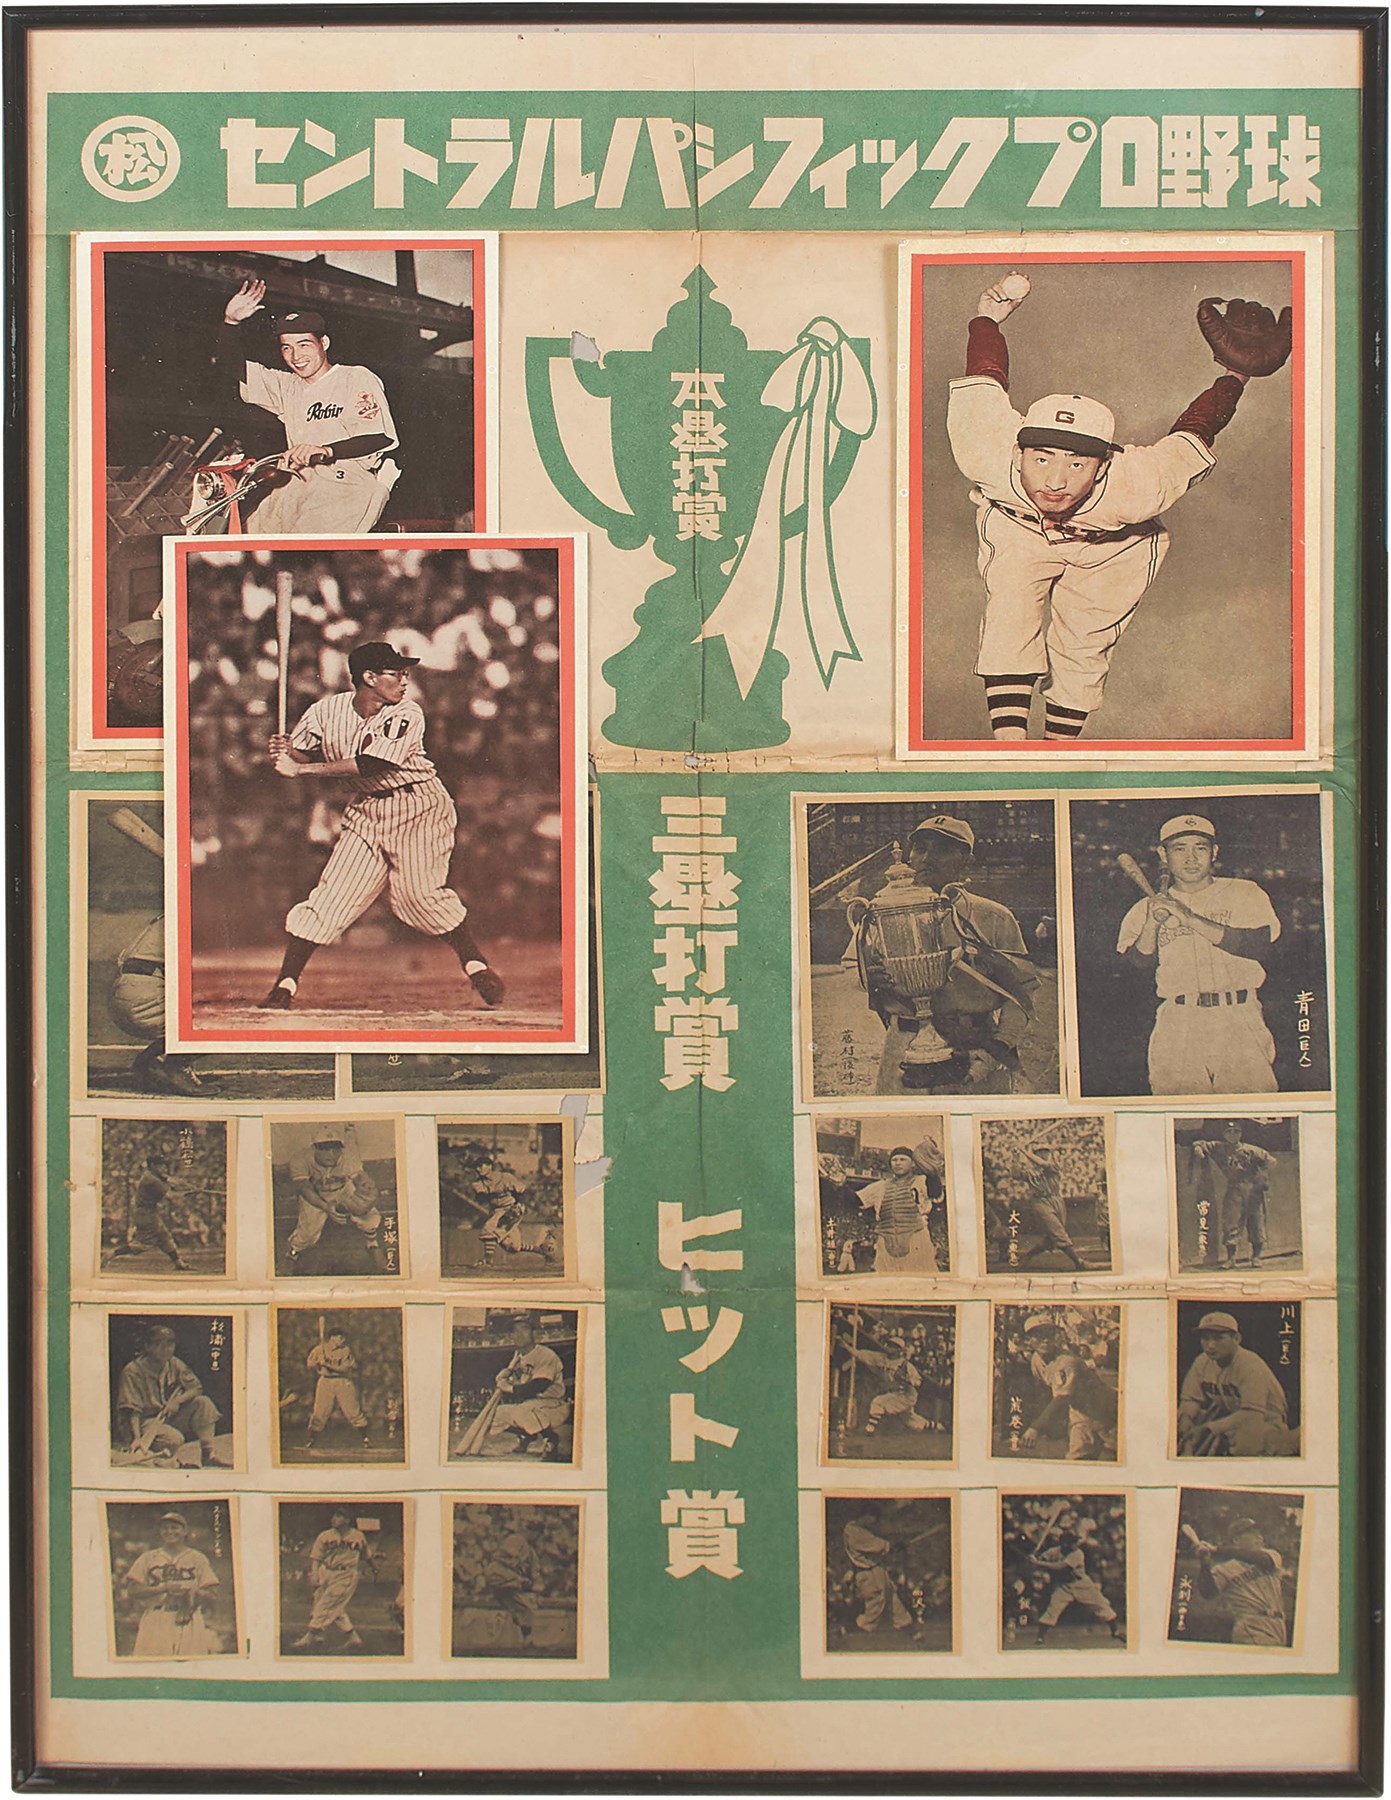 Baseball and Trading Cards - 1950 Marumatsu Bromide Card Prize Sheet w/Victor Starffin